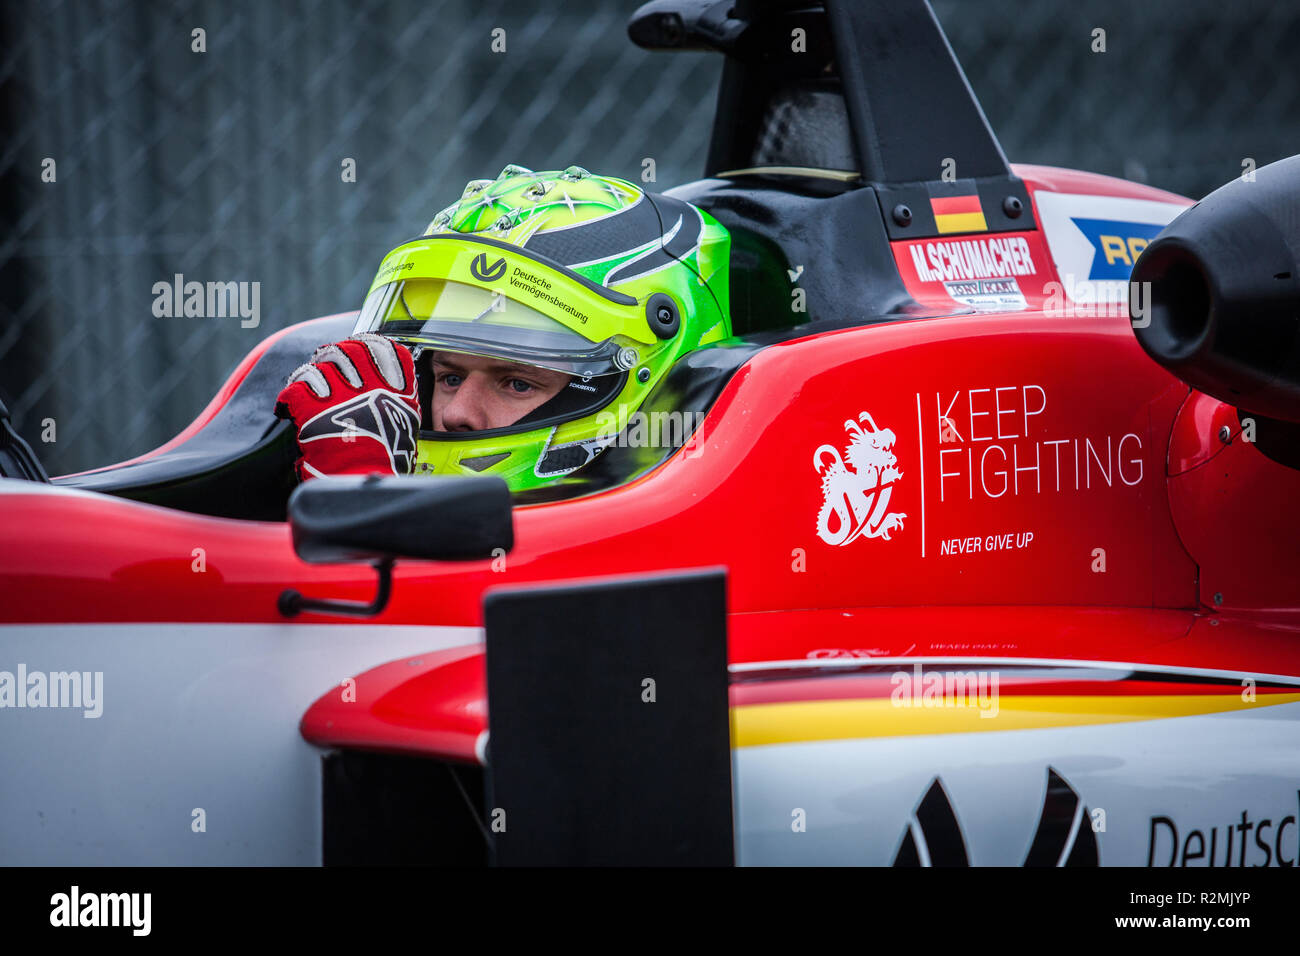 Formula 3 racer nel suo pozzetto, close-up, Mick Schumacher Foto Stock